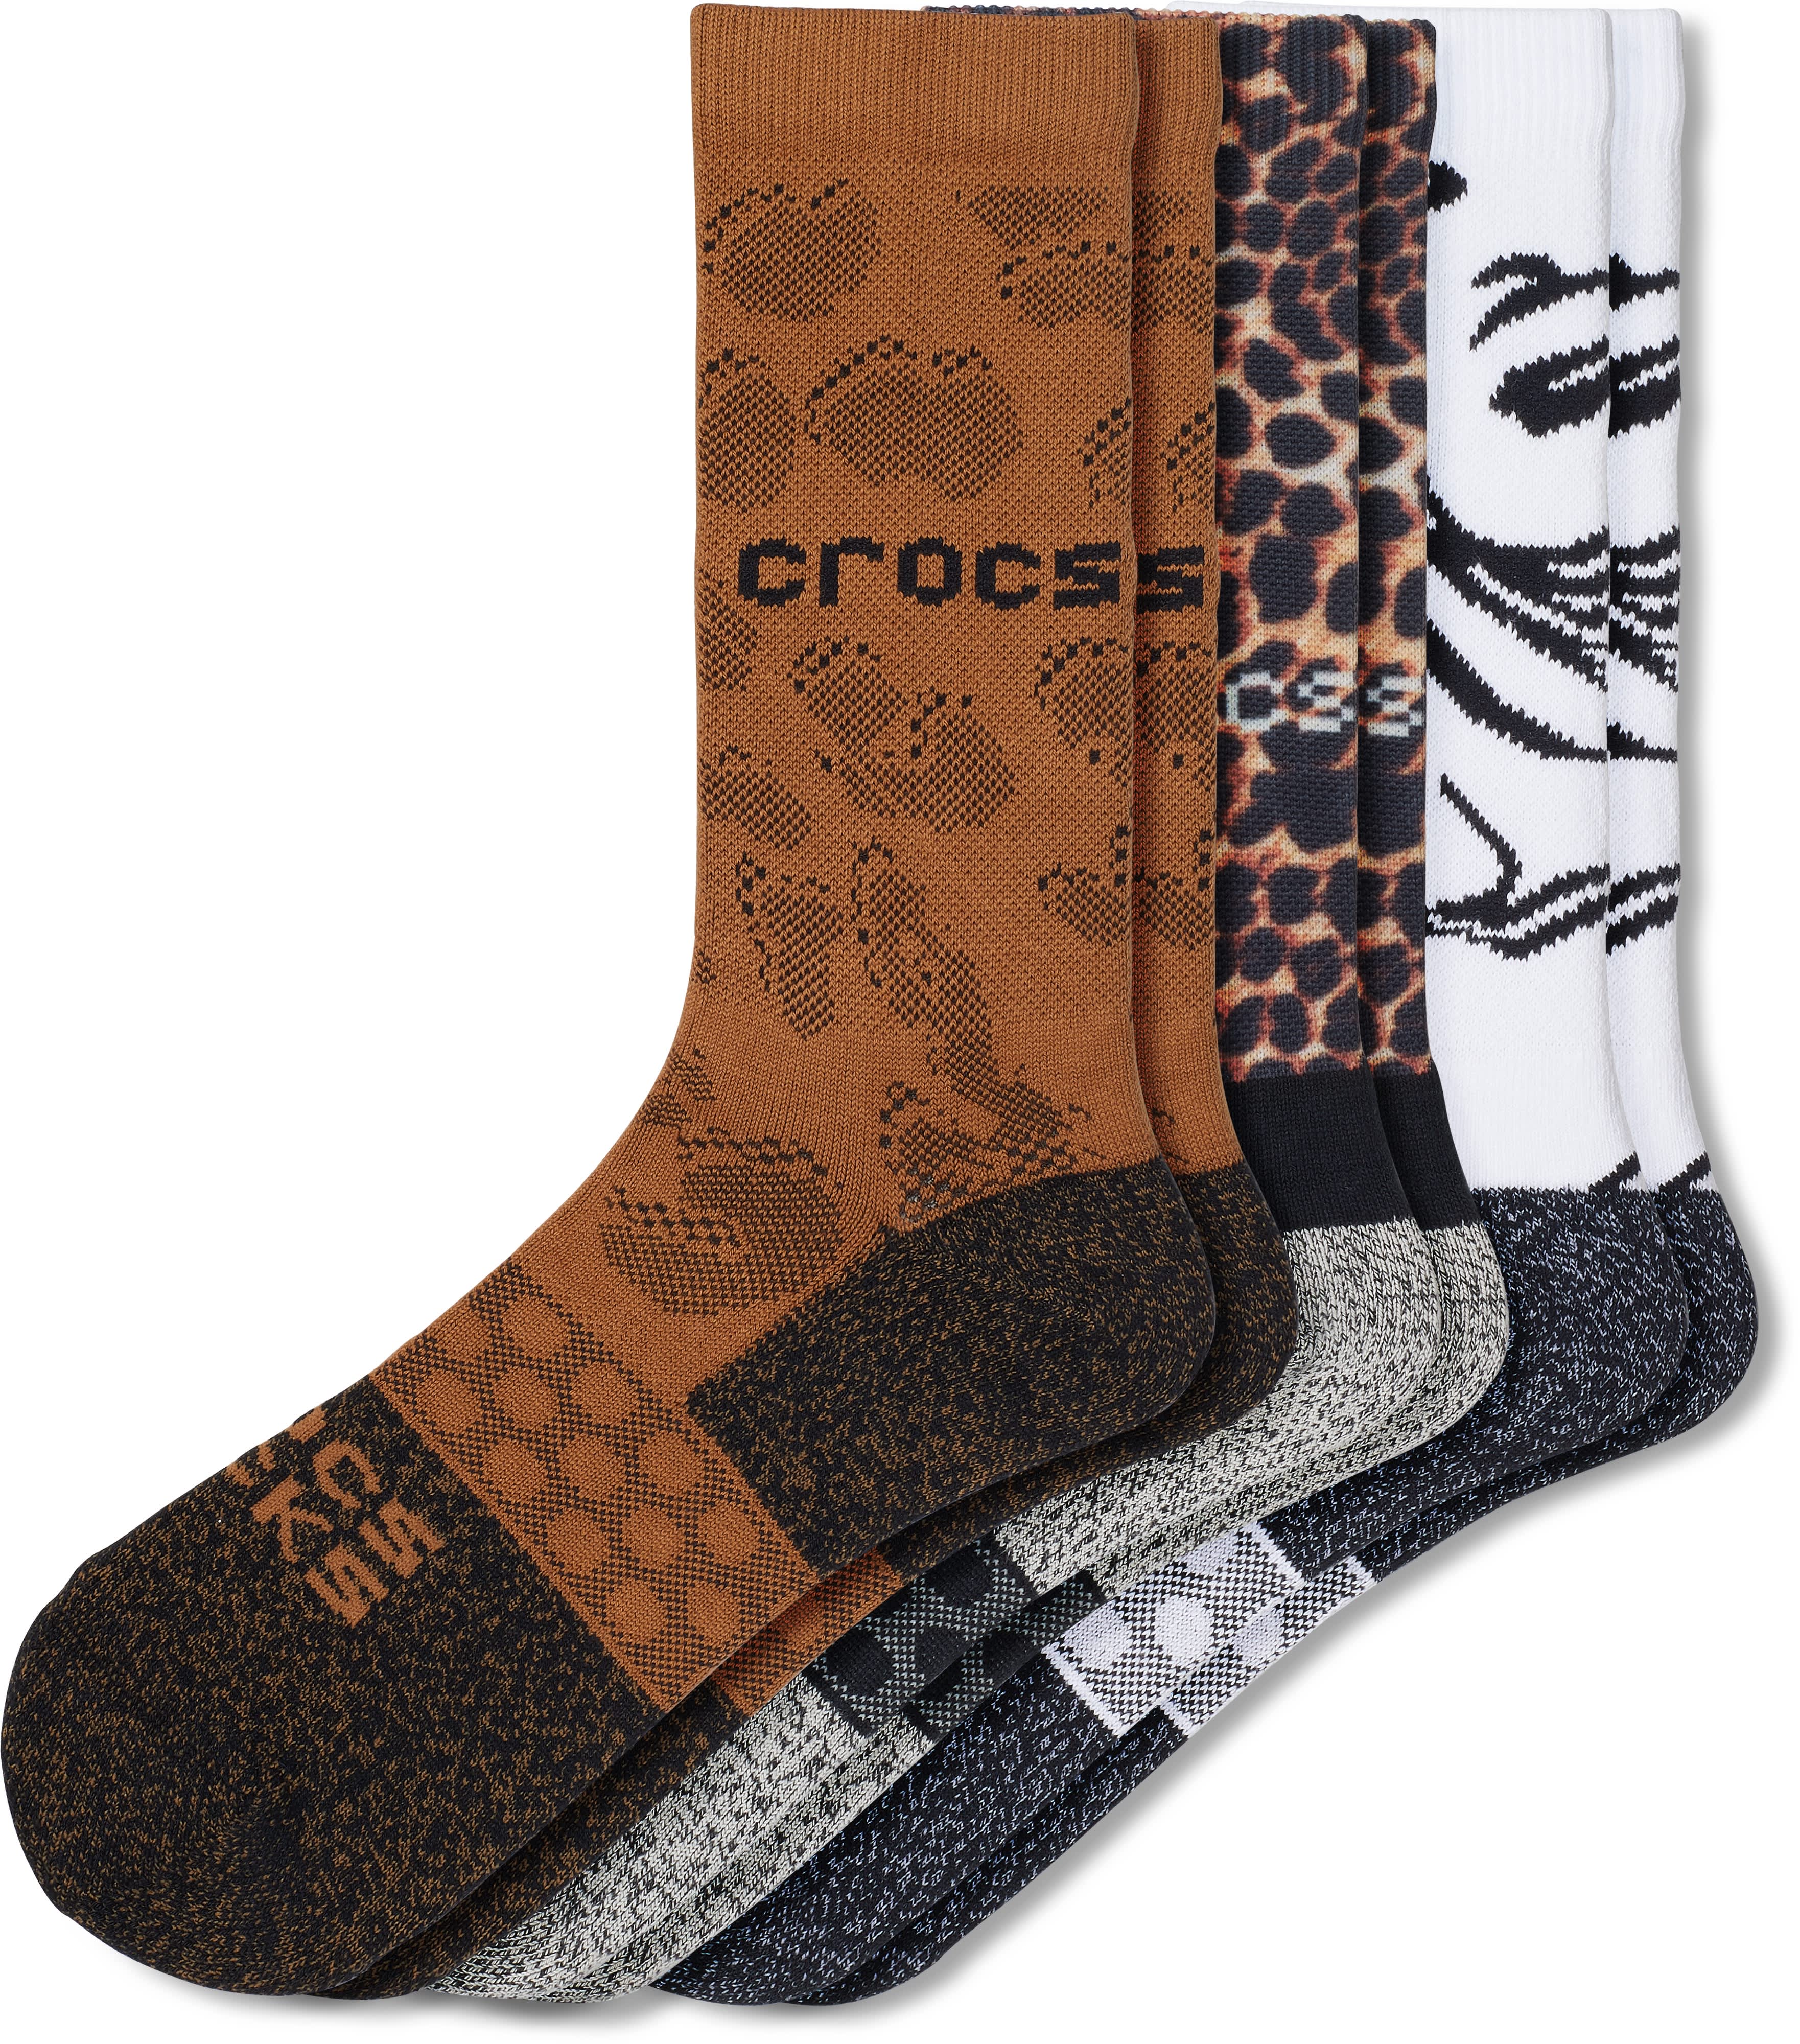 Crocs | Unisex | Crocs Socks Adult Crew Animal Remix 3 Pack | Shoes | Black / Multi Animal | S